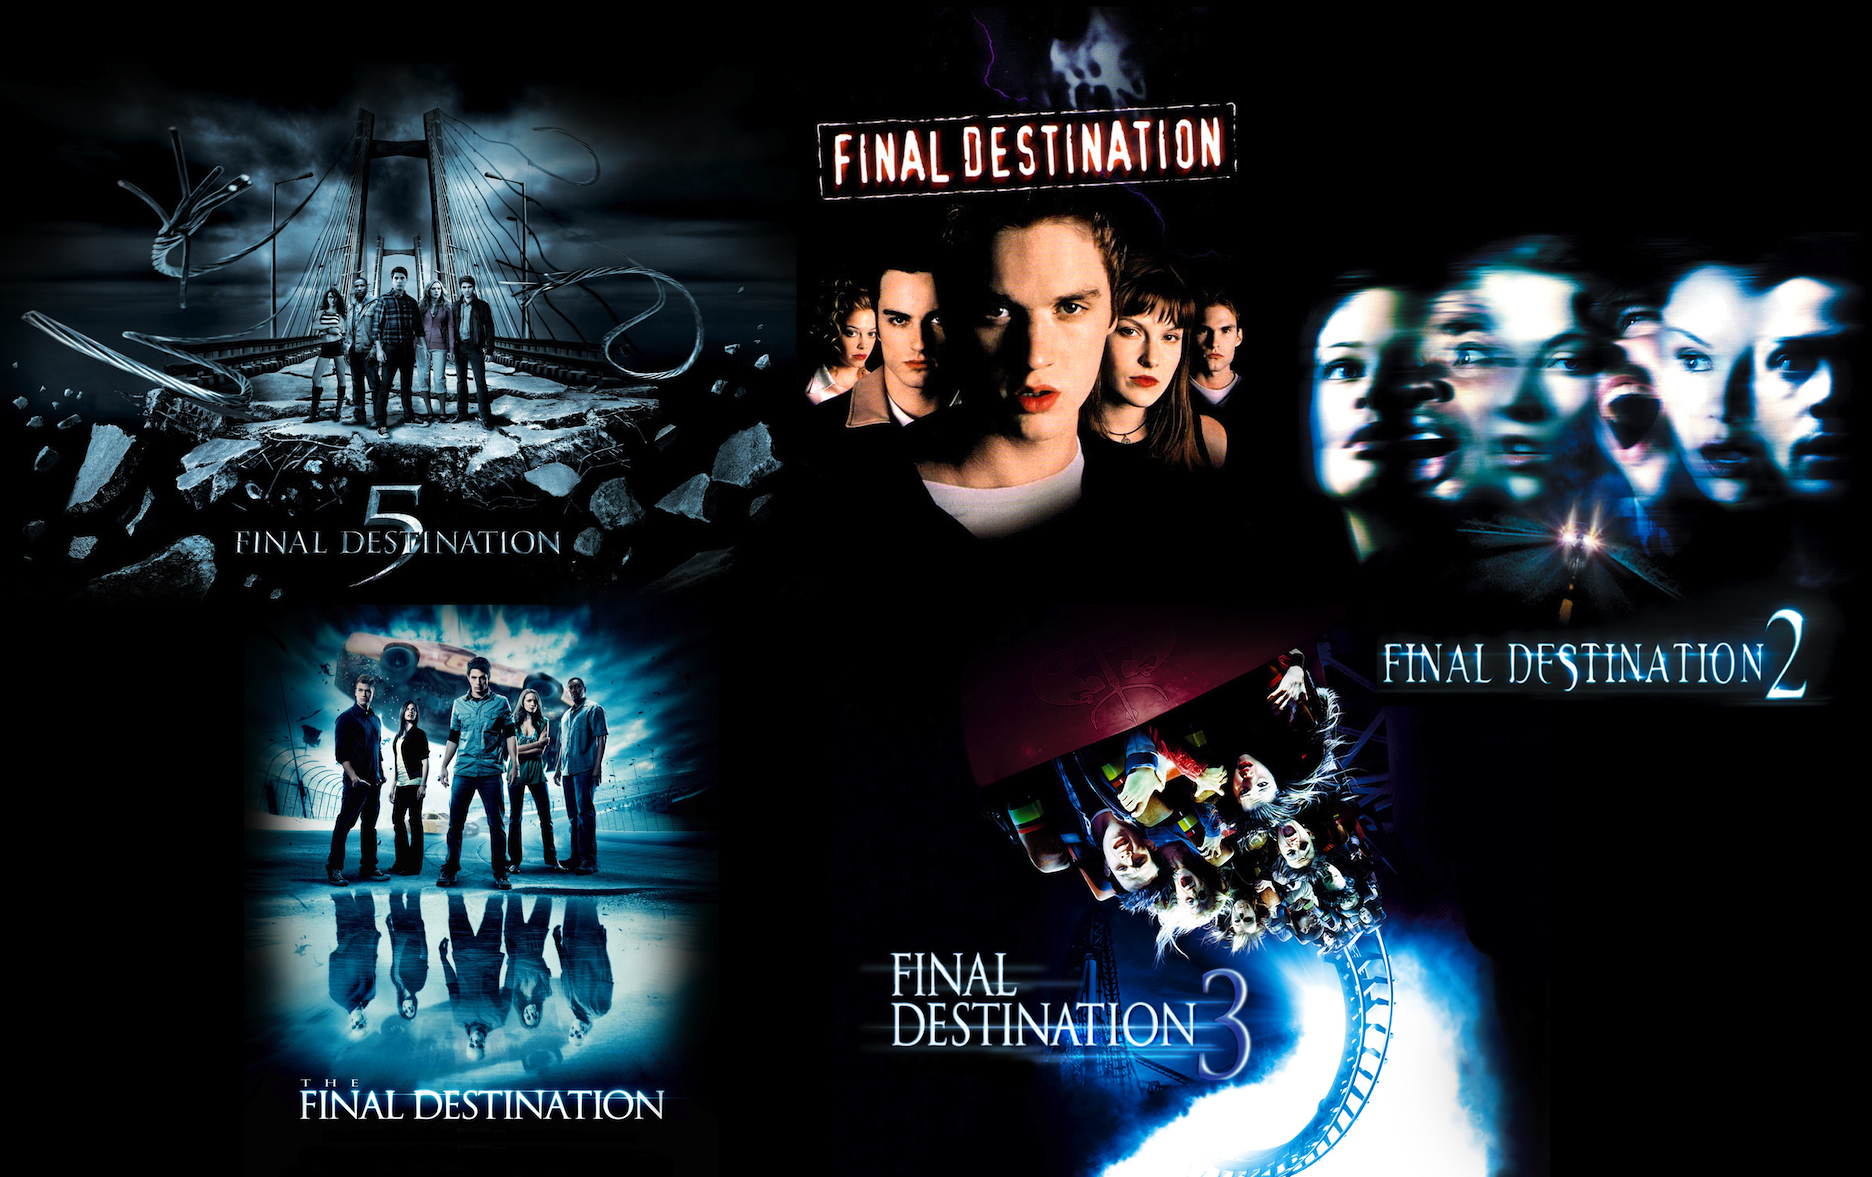 final destination 3 full movie eng sub